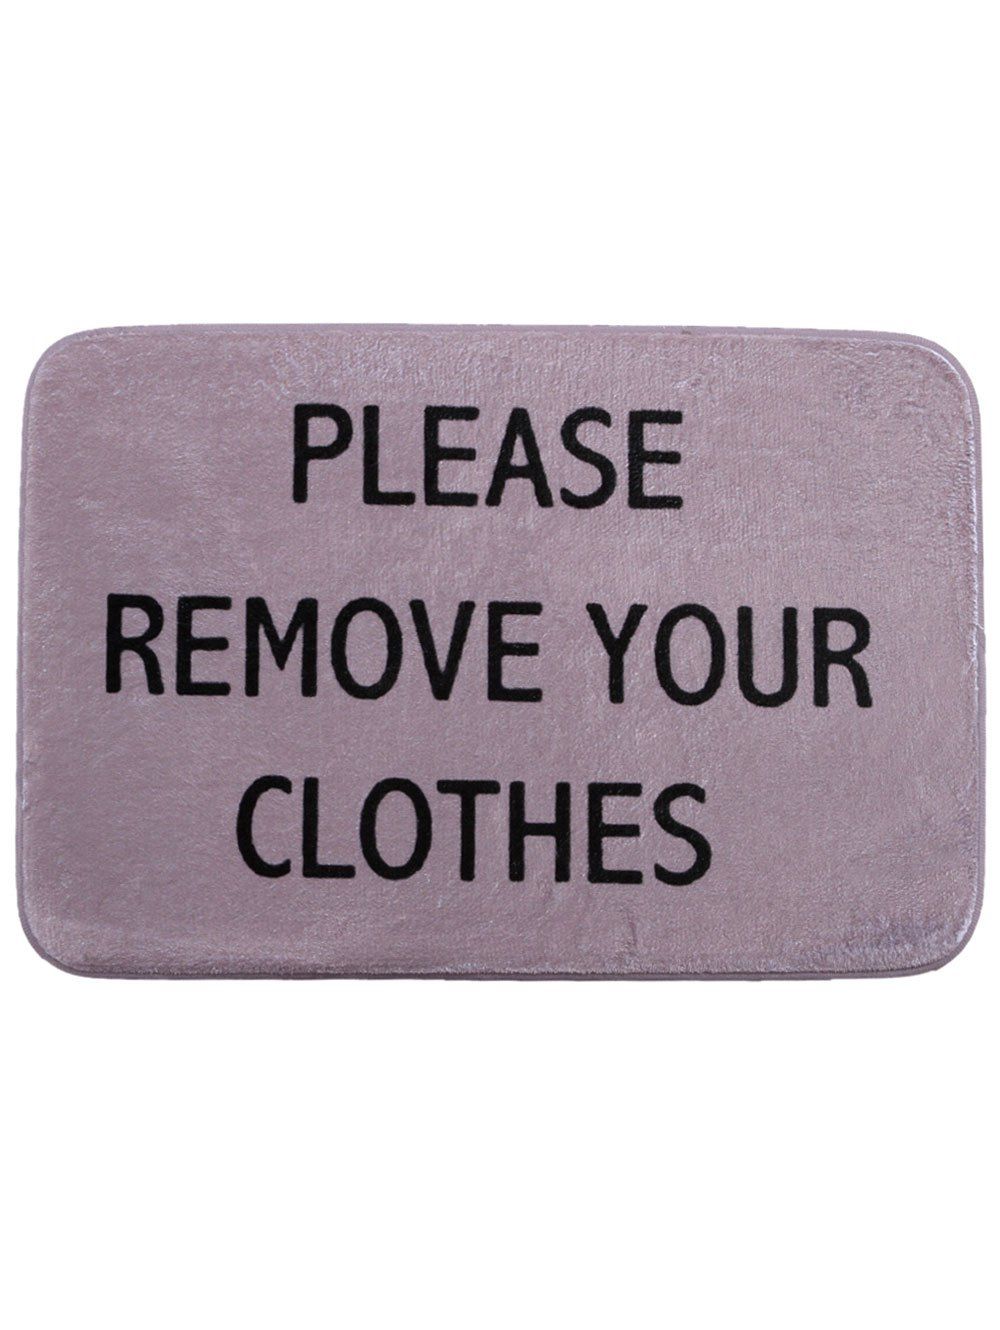 Remove your clothes. Please remove your. Купи плиз. Buy me please. Купить плиз